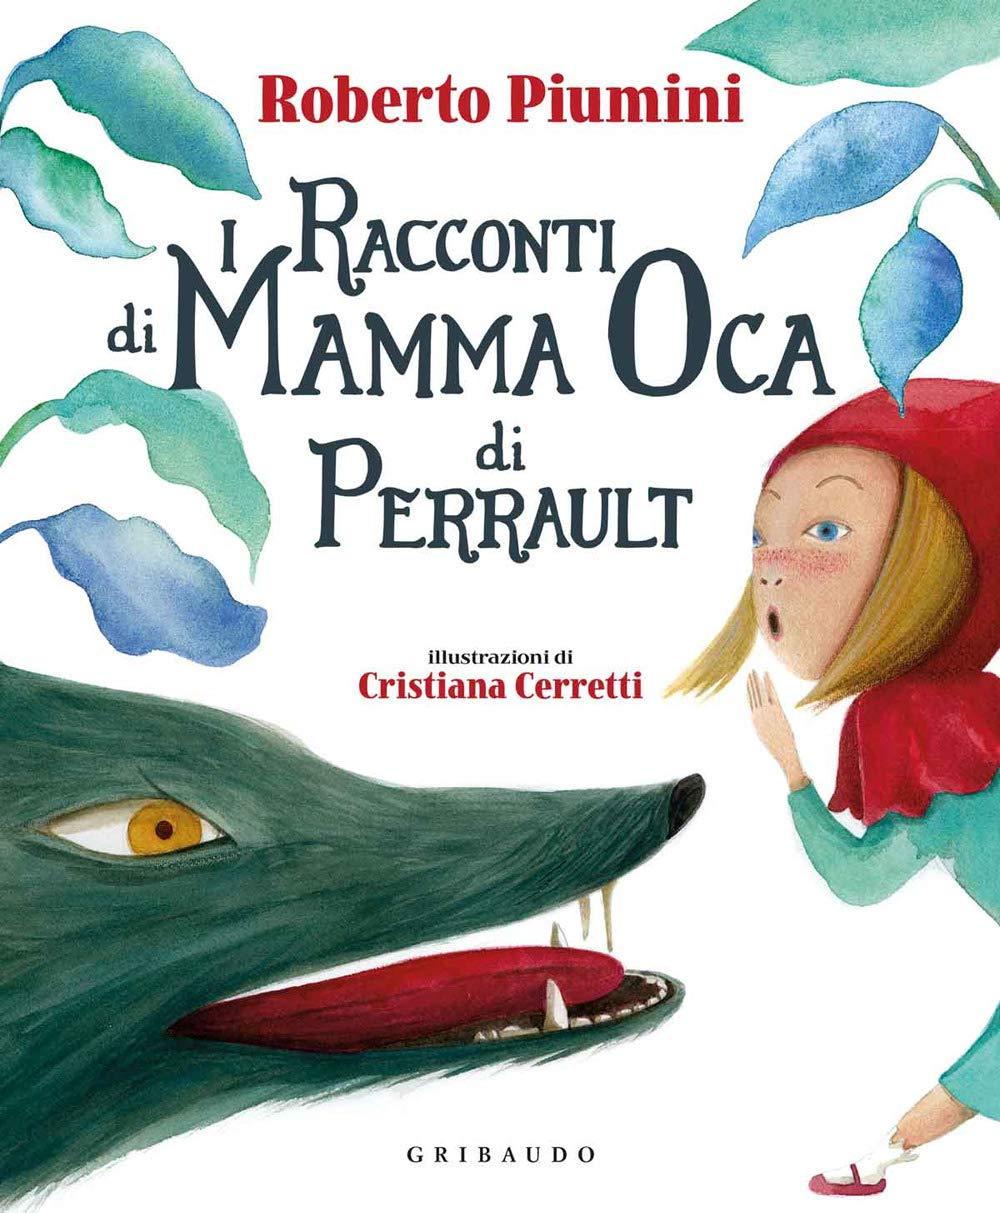 Libro "I racconti di mamma Oca" di Charles Perrault